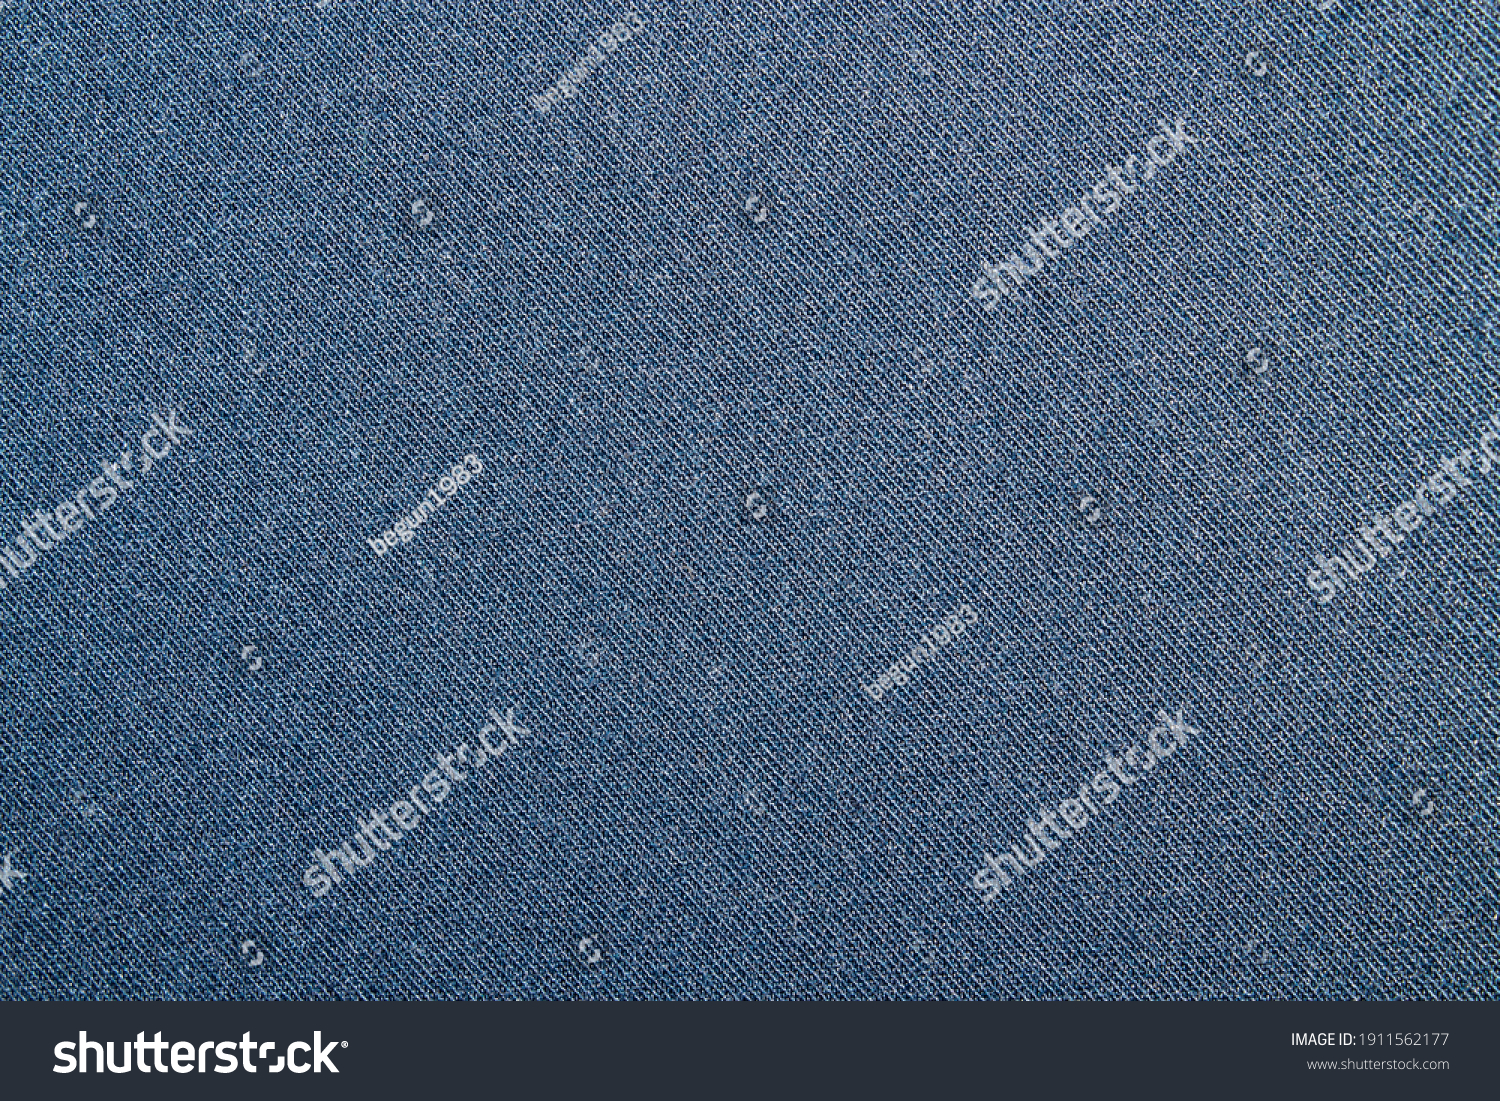 Dark blue tight denim background.Detailed texture of blue denim fabric with high resolution. #1911562177